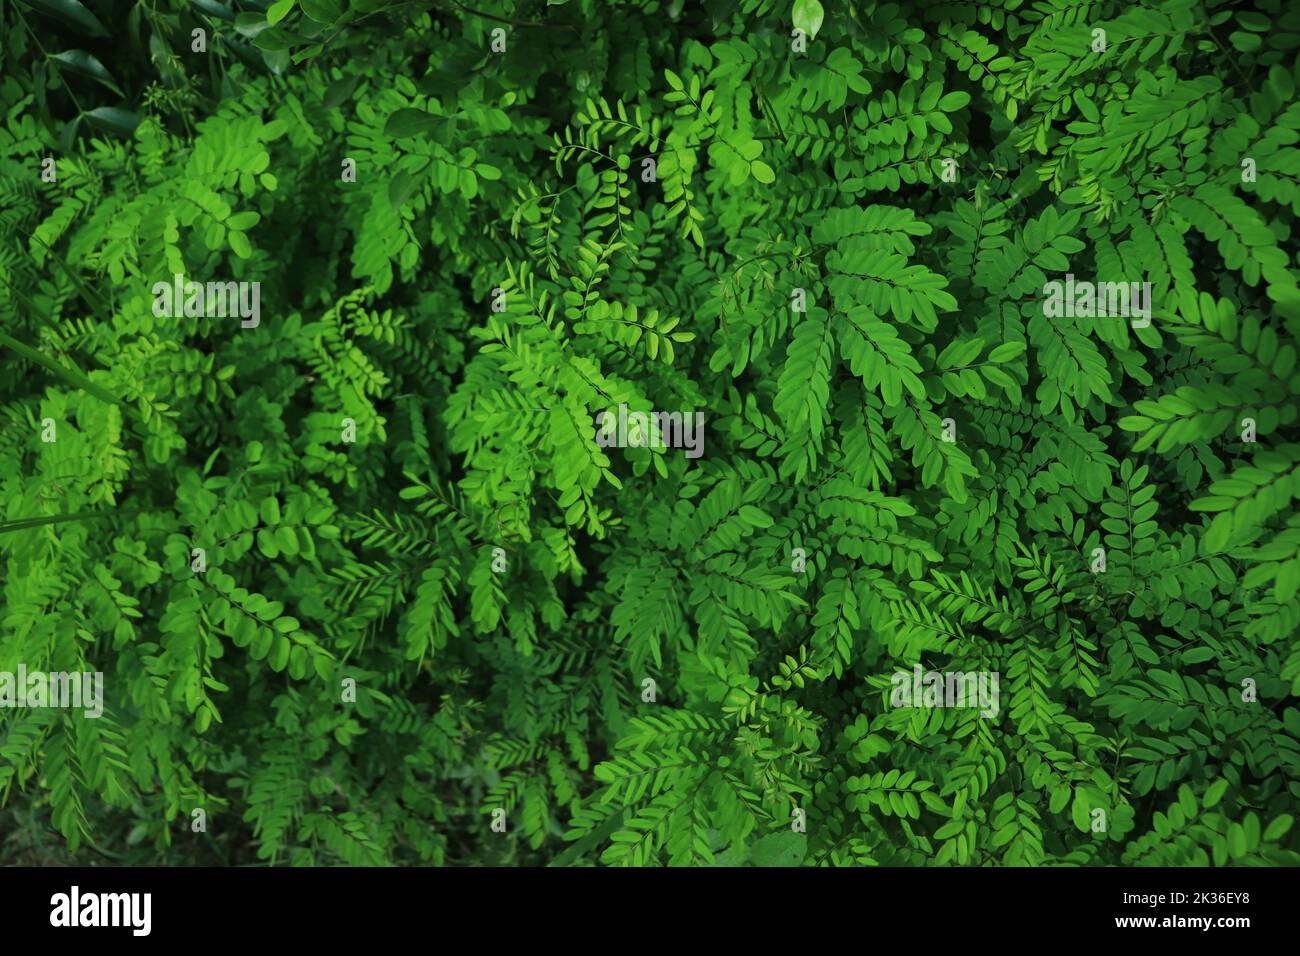 fresh green leaves flat lay background Stock Photo